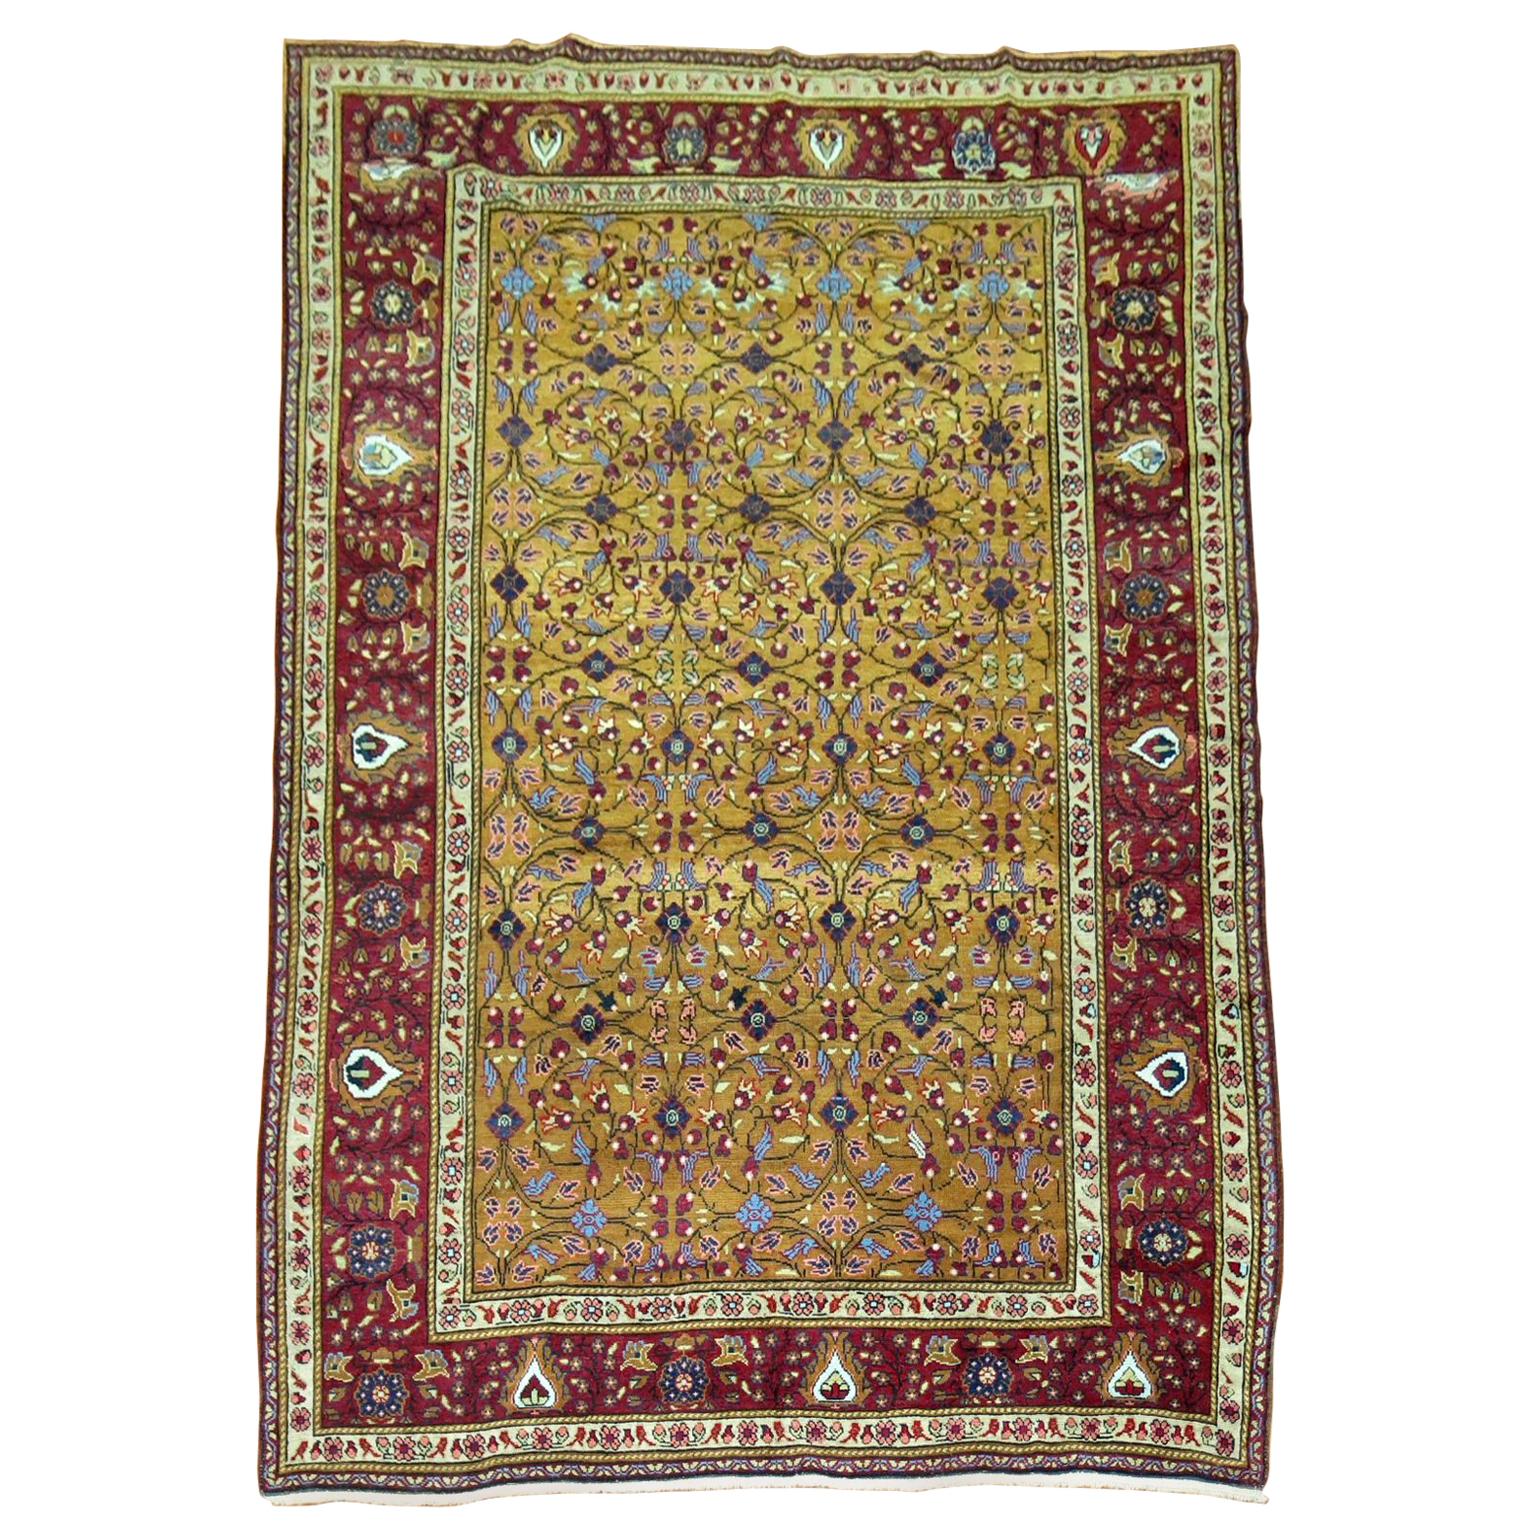 Colorful mid-century Intermediate Room size Traditional Turkish Sivas rug.

Measures: 6'10'' x 10'.